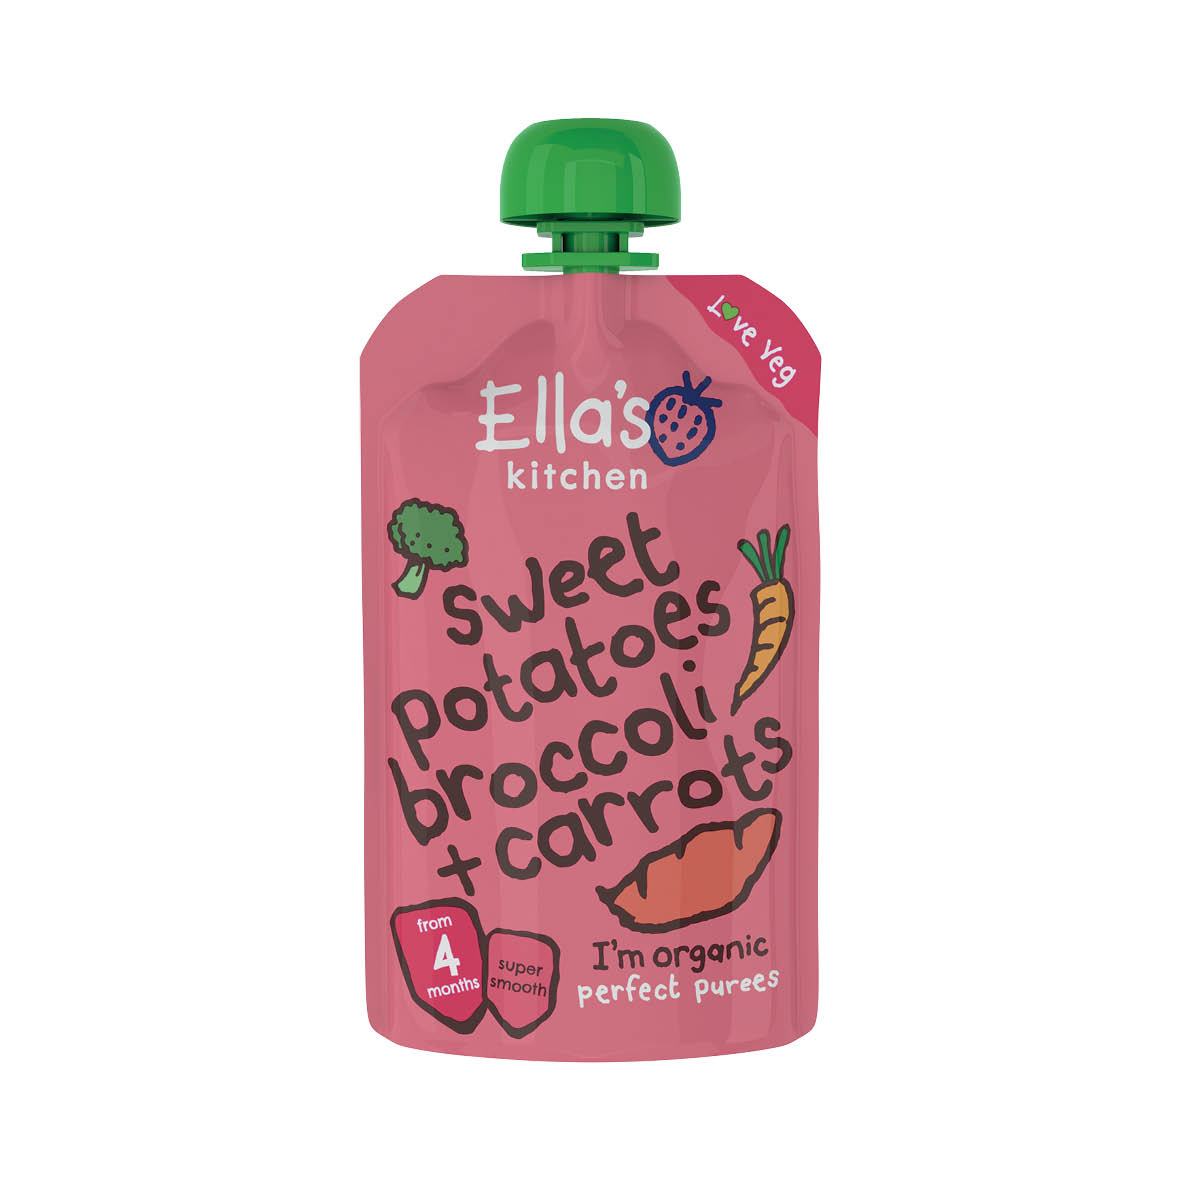 Ella's Kitchen sweet potatoes, broccoli and carrots